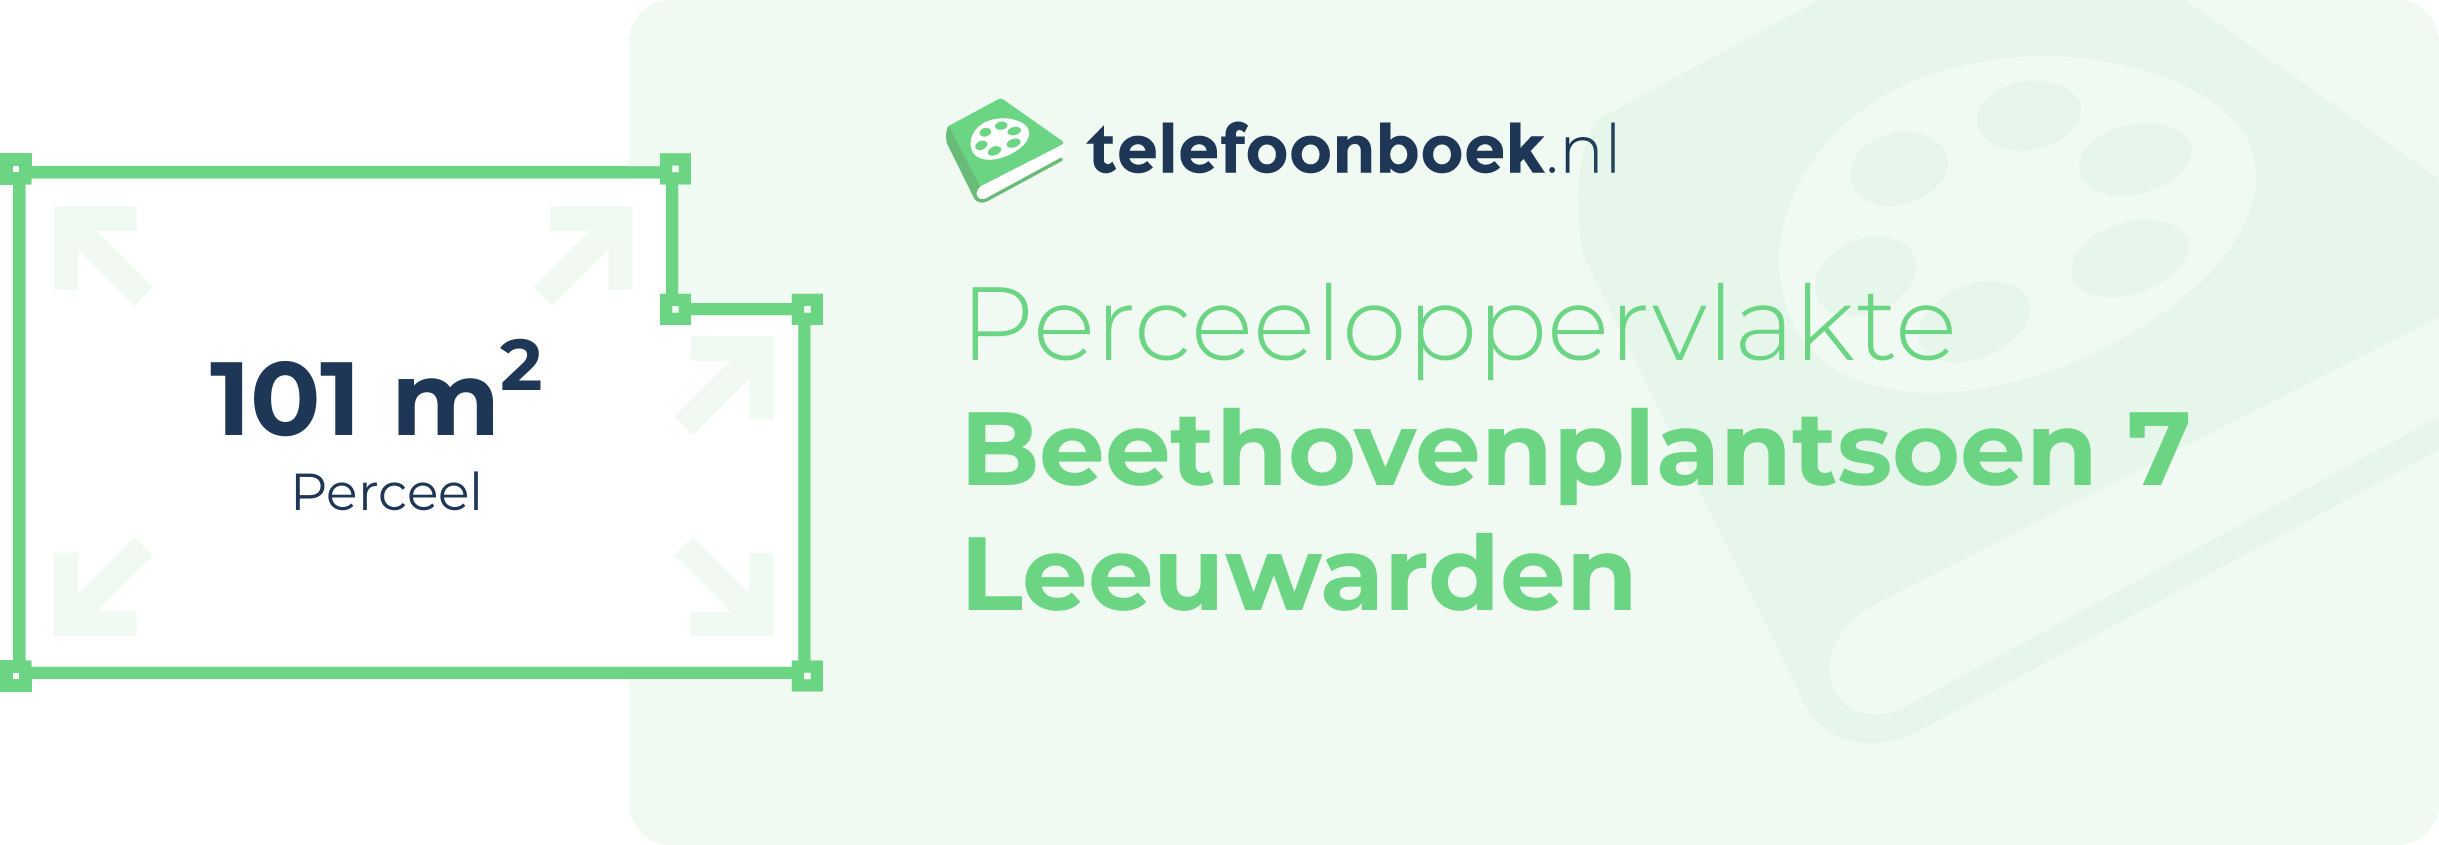 Perceeloppervlakte Beethovenplantsoen 7 Leeuwarden